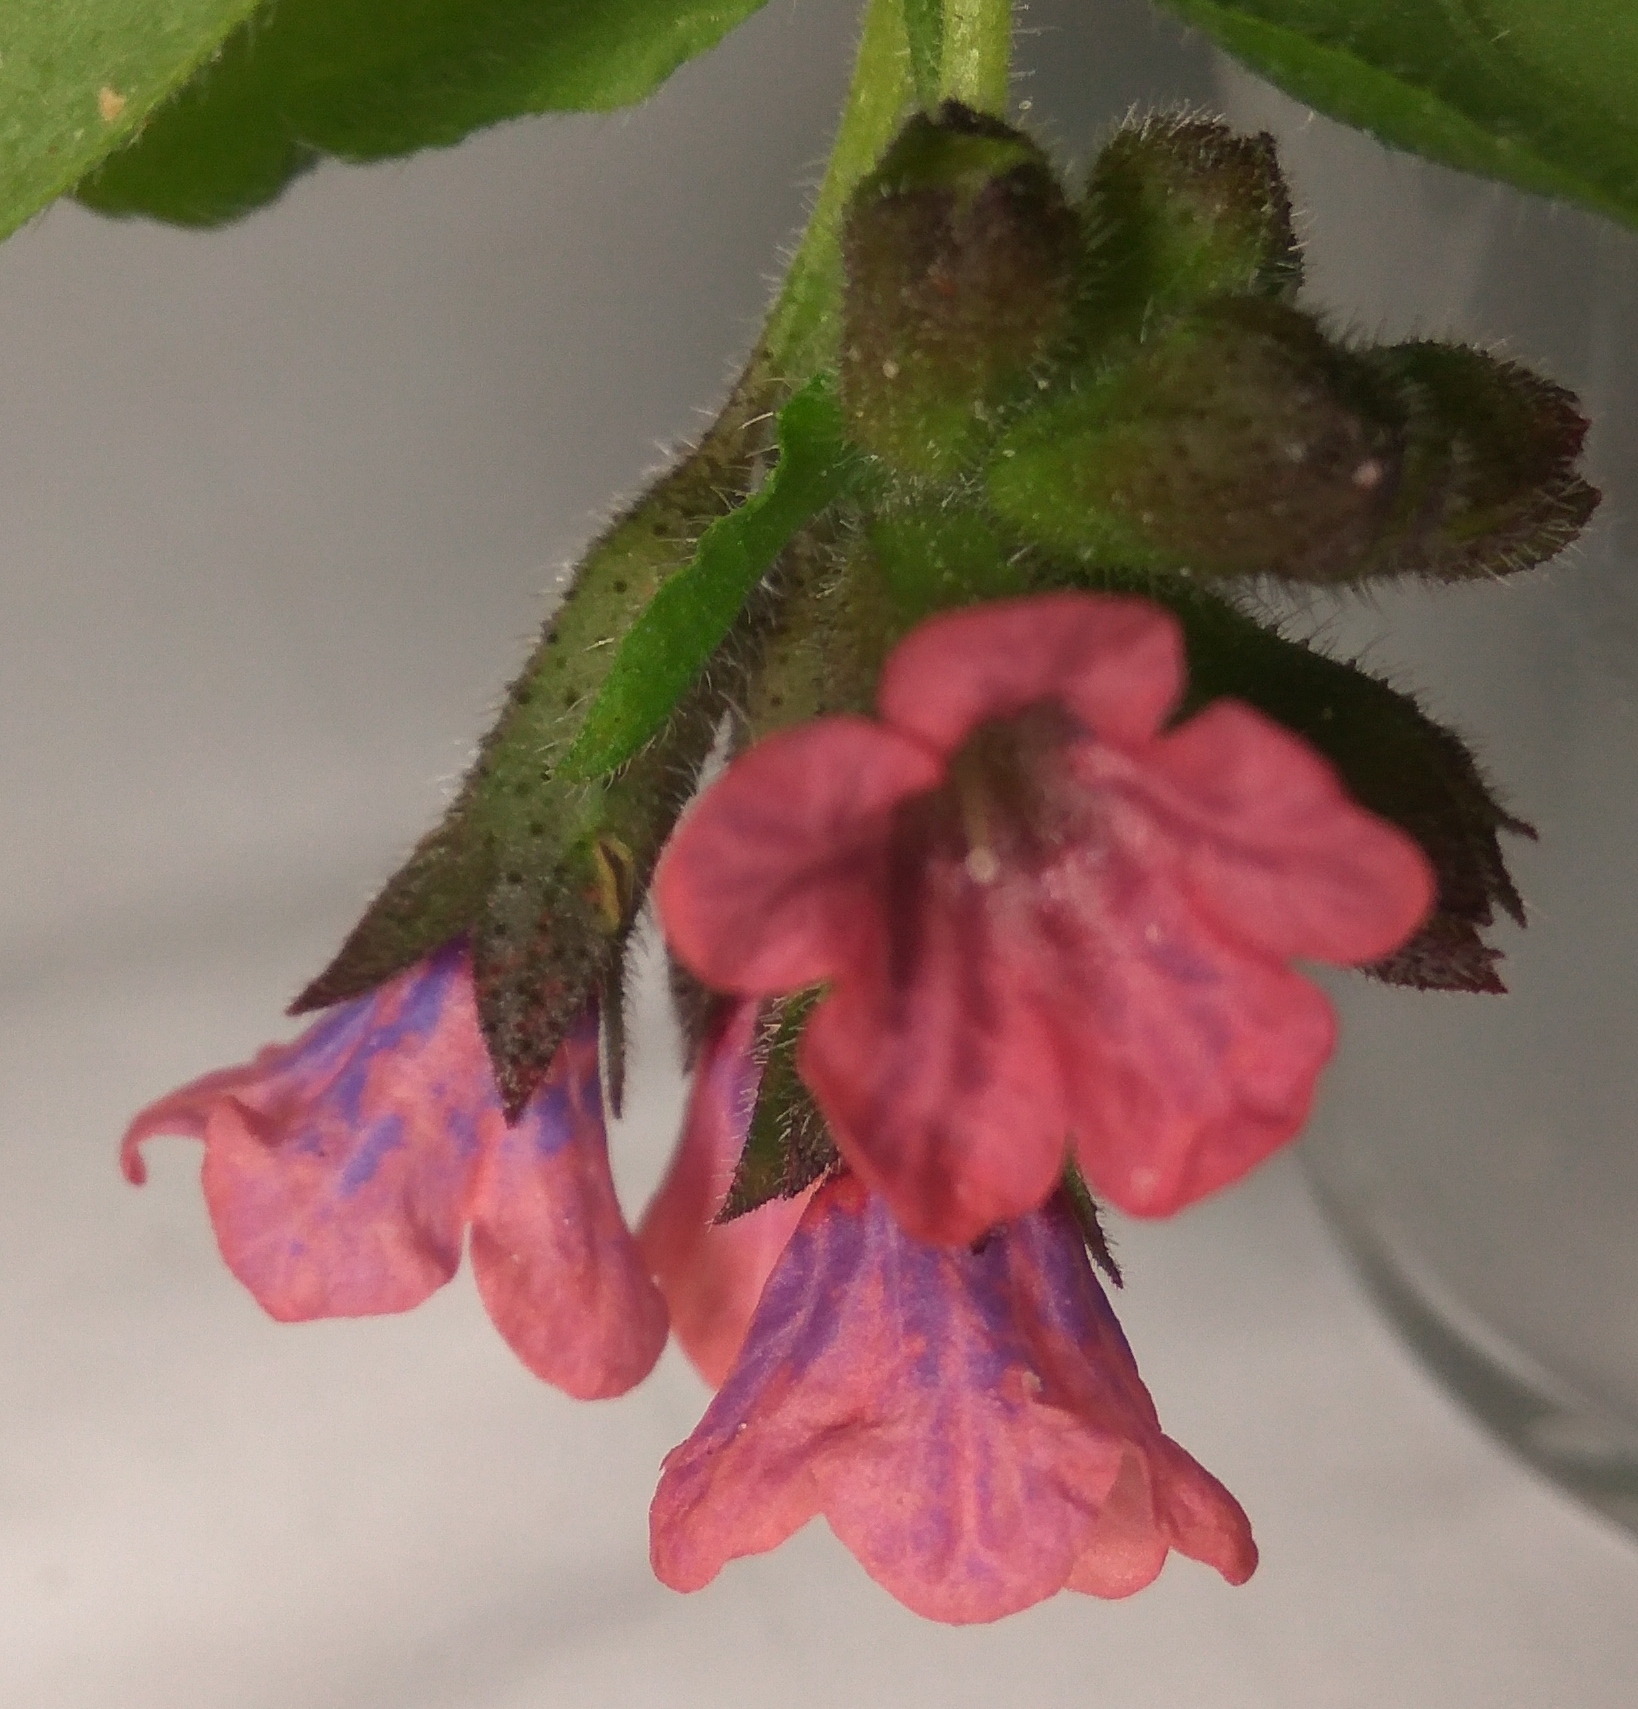 Pulmonaria mollis flowers: treatment with ammonia and hydrochloric acid